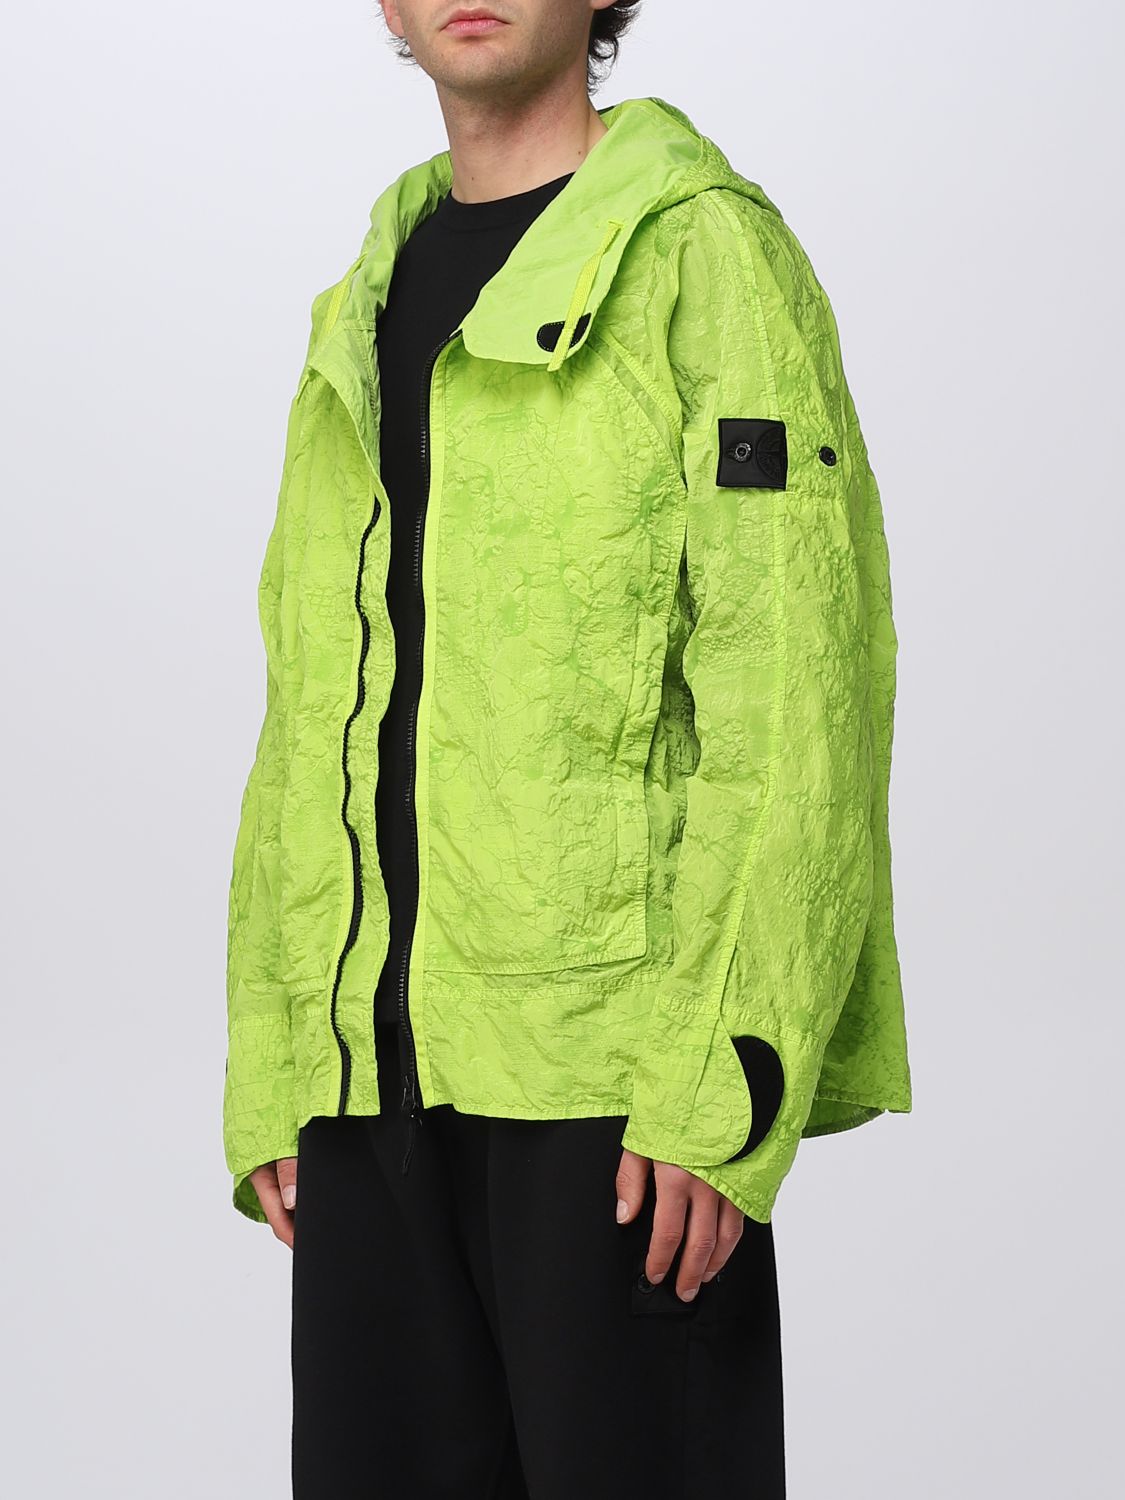 STONE ISLAND SHADOW PROJECT: jacket for man - Acid Green | Stone